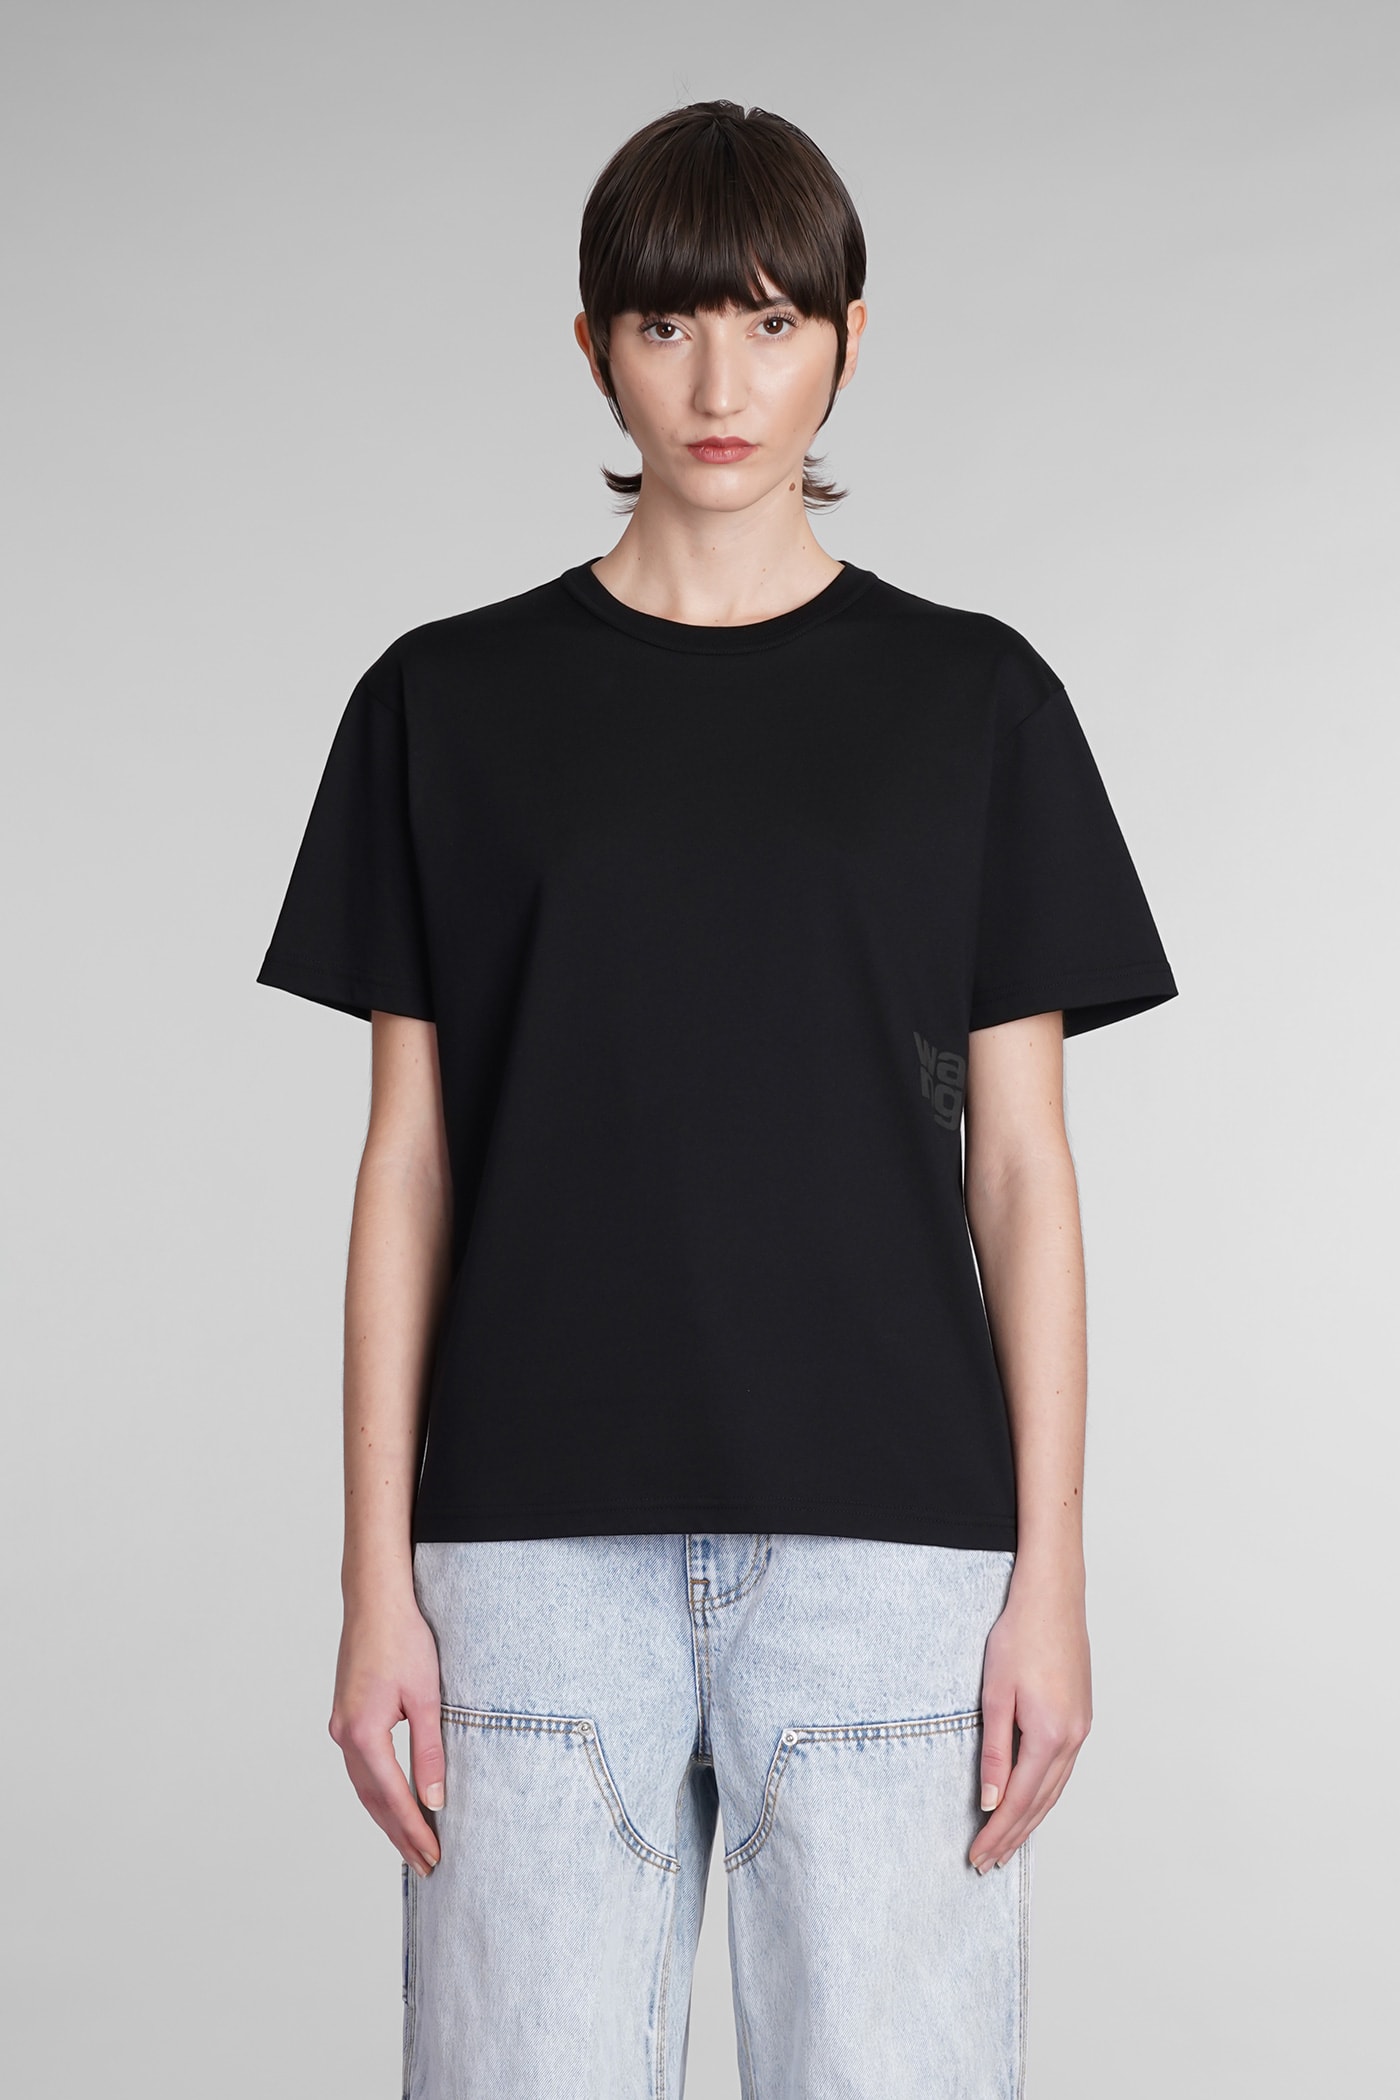 Alexander Wang T-shirt In Black Cotton